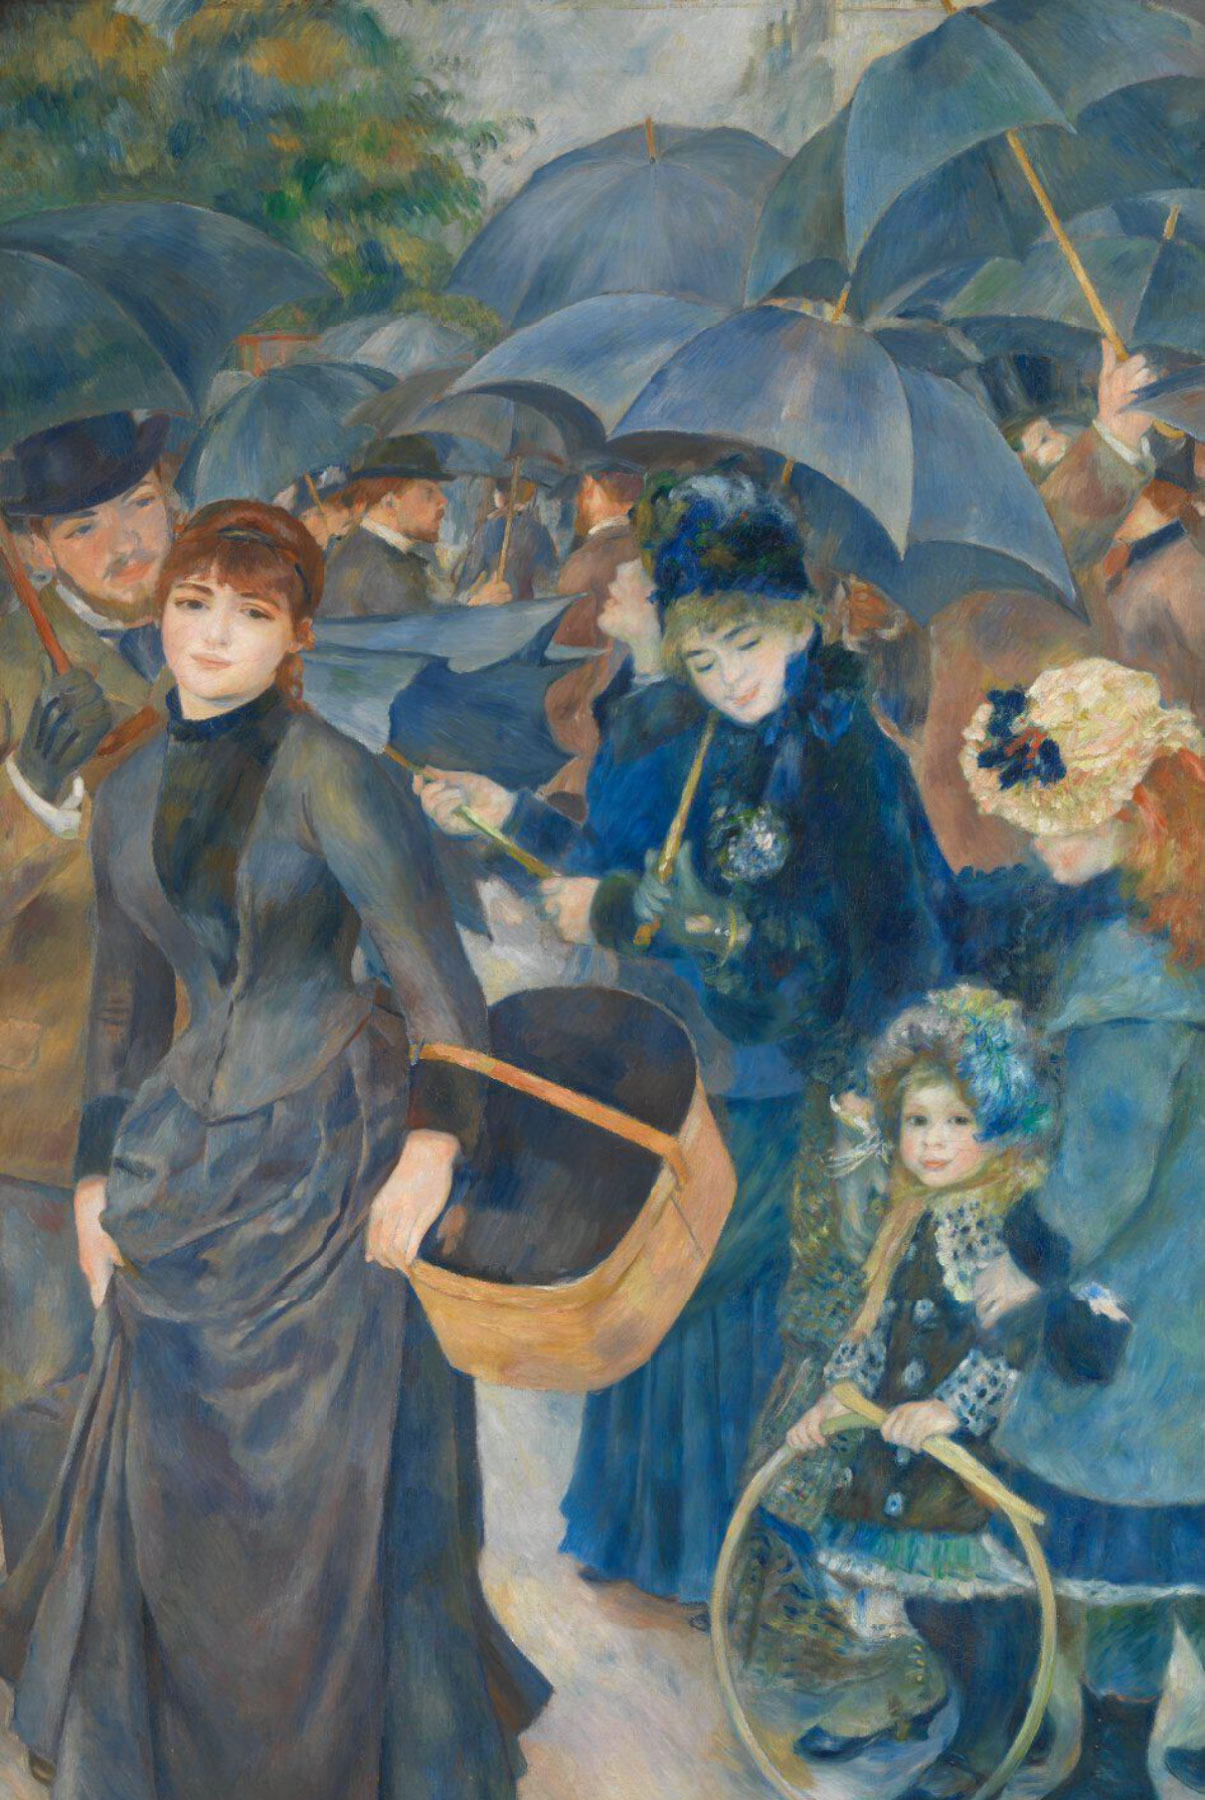 Les Parapluies - Gli ombrelli - The Umbrellas - quadro di Renoir